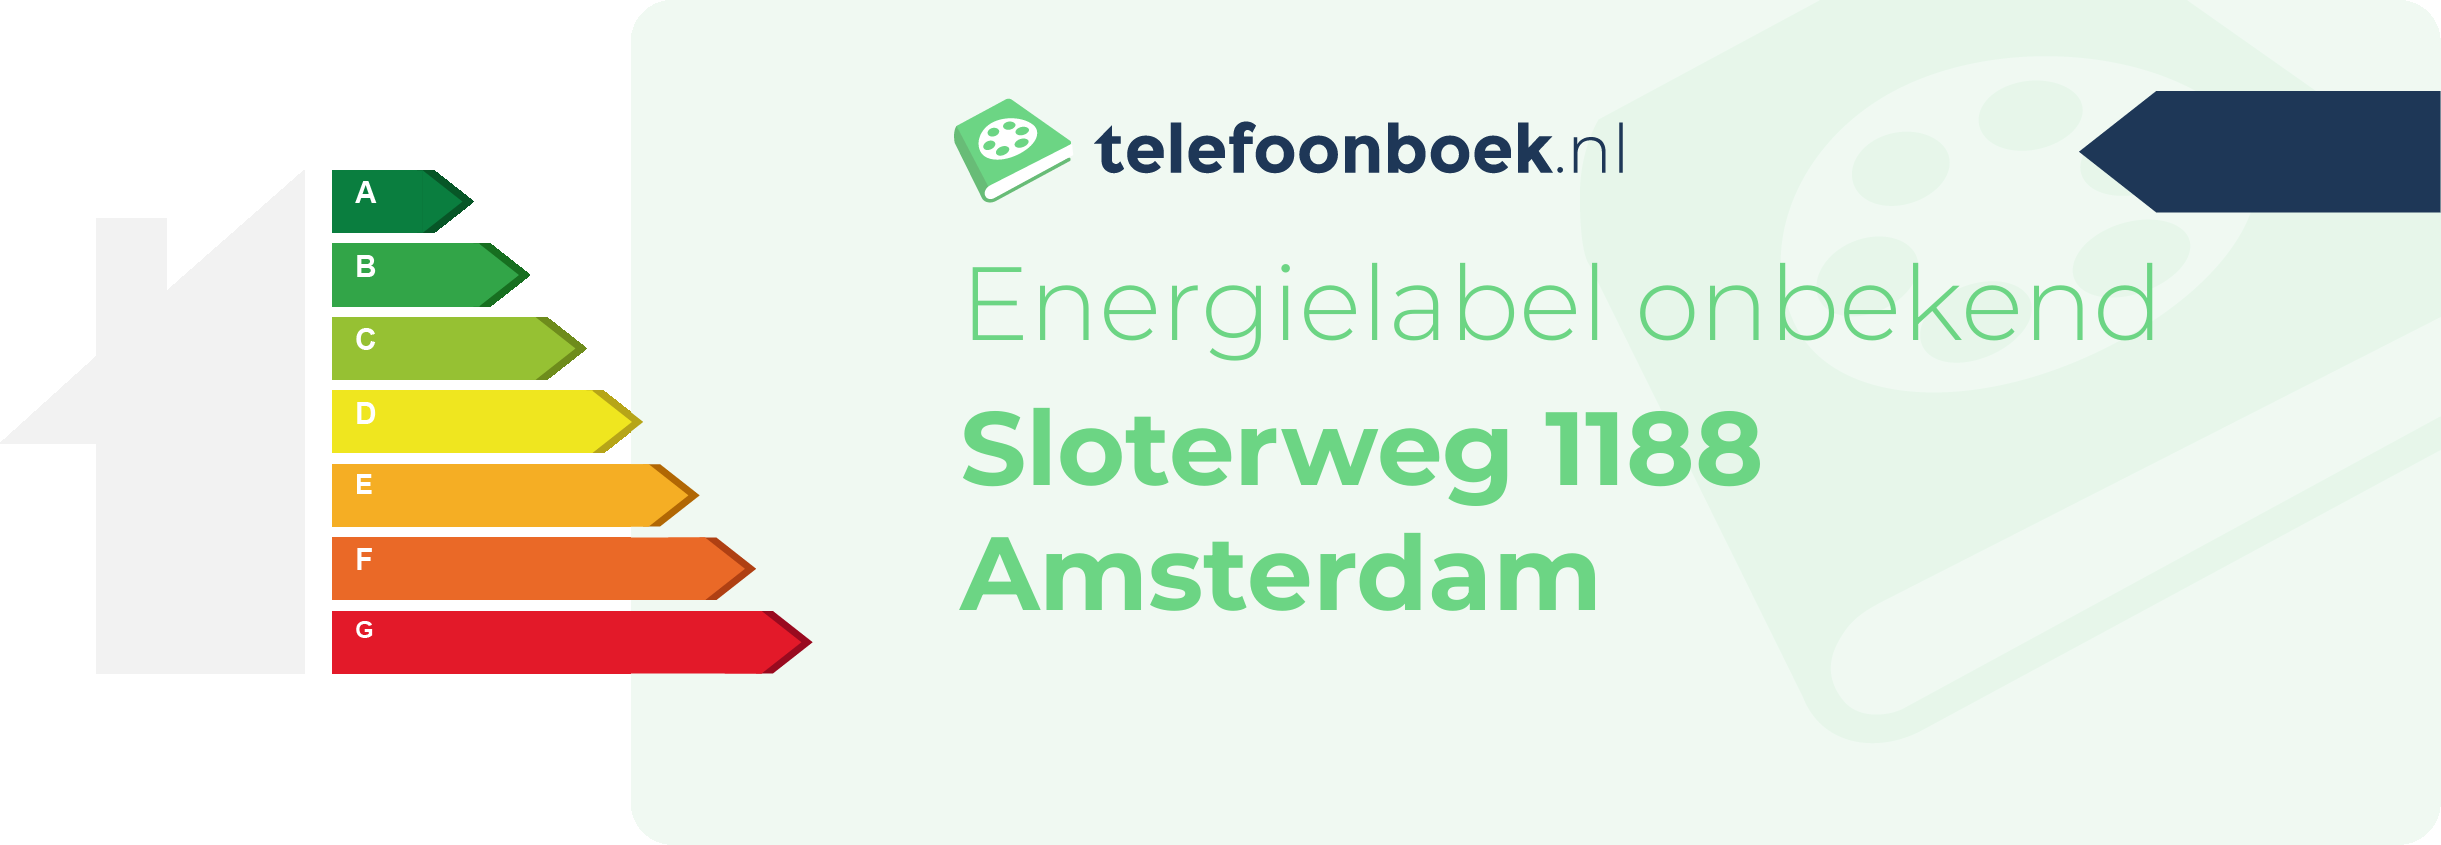 Energielabel Sloterweg 1188 Amsterdam